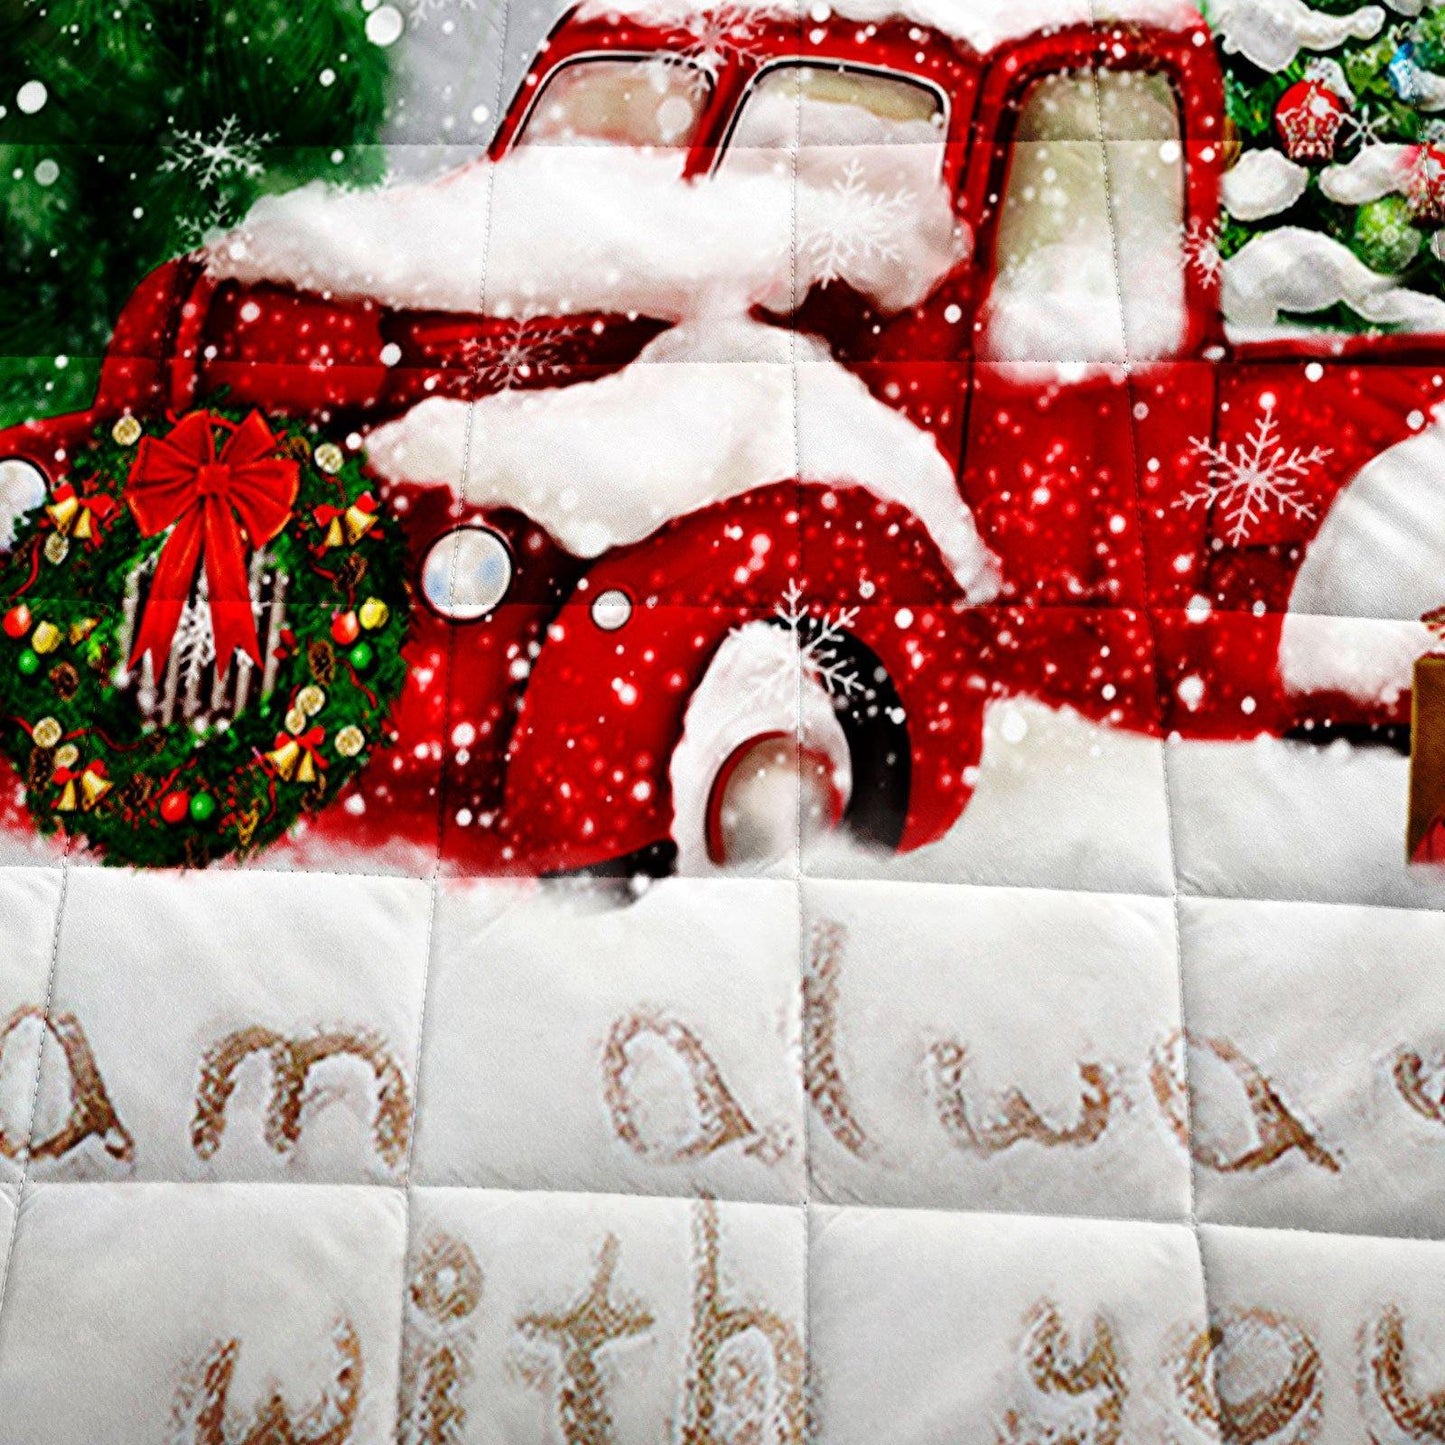 Wongs Bedding Christmas pattern quilt set - Beddinger